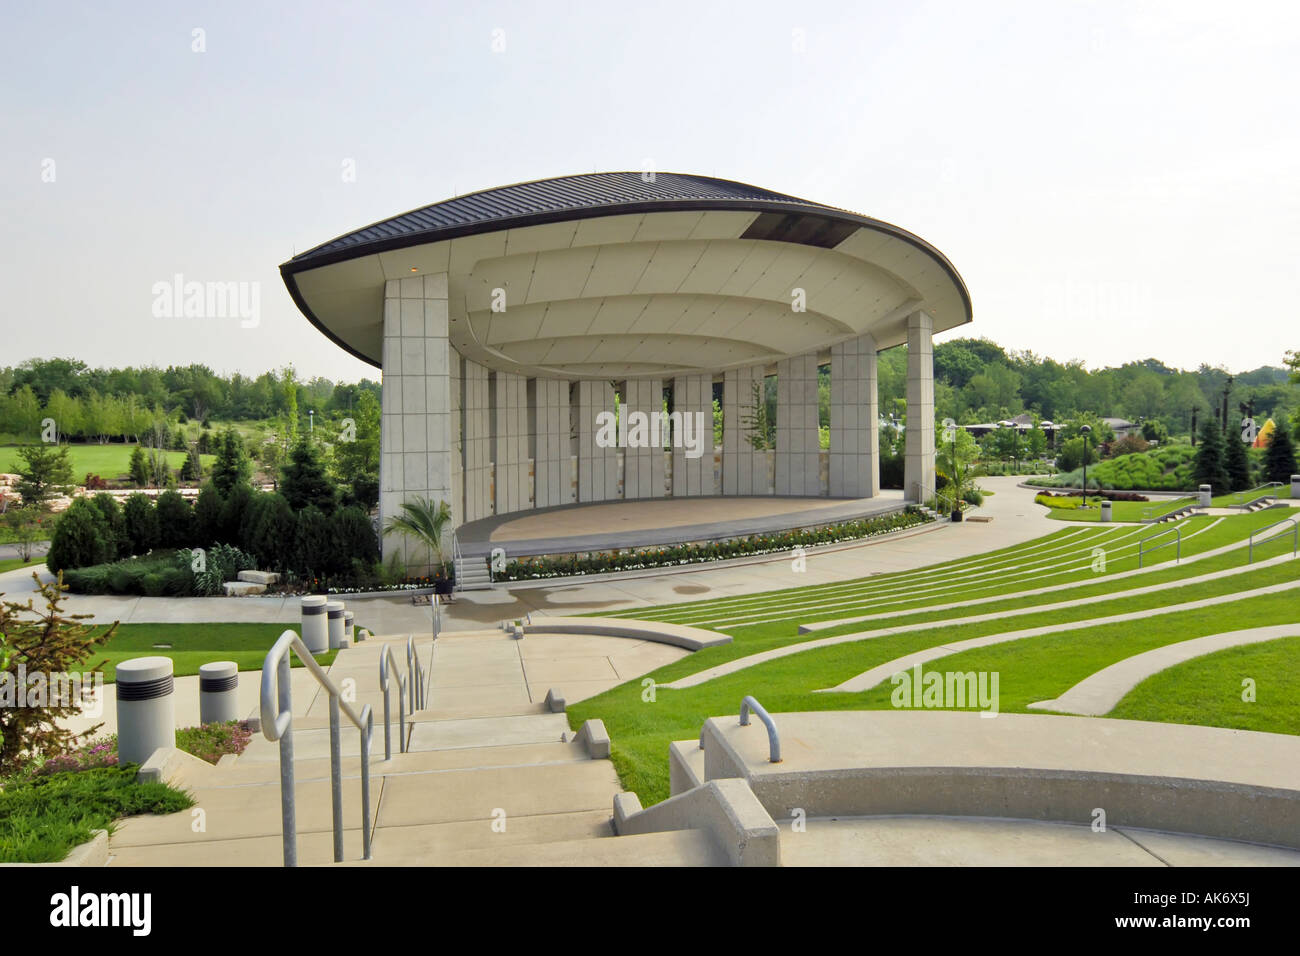 The Amphitheater at the Frederik Meijer Gardens Grand Rapids Michigan